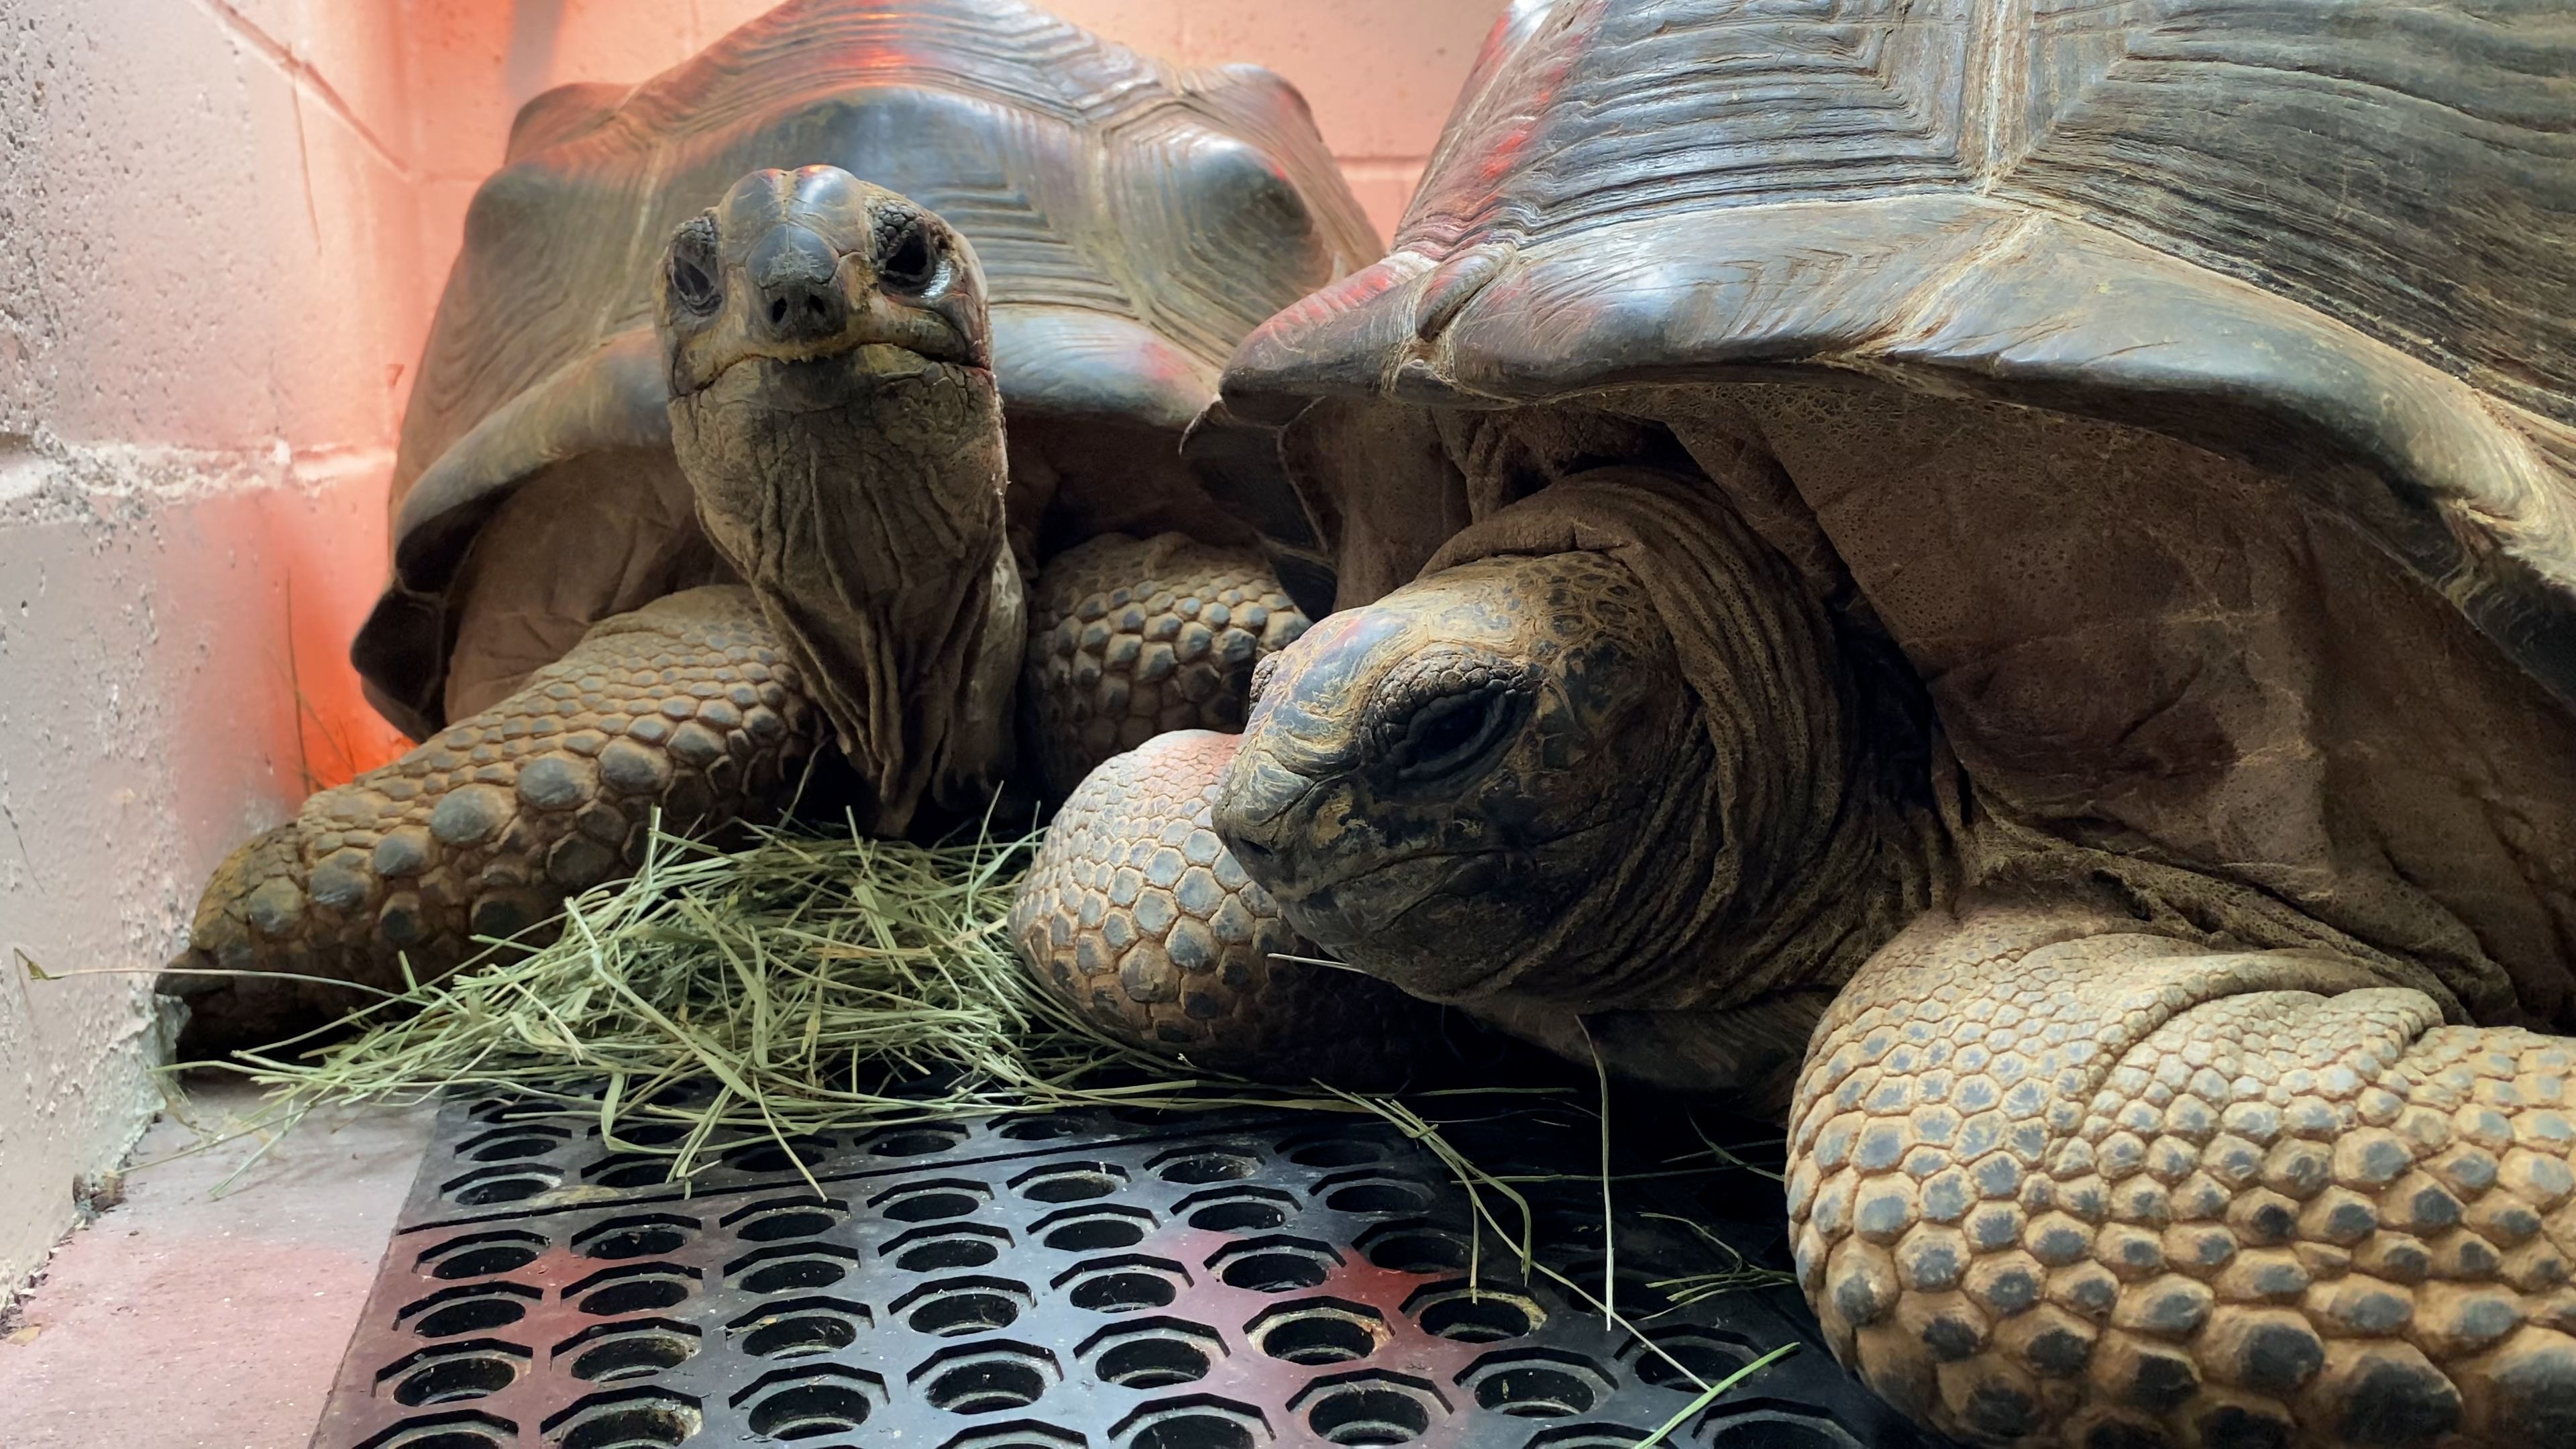 Rescued tortoise arrival, Oakland Zoo celebration, Second chance, Conservation efforts, 3840x2160 4K Desktop